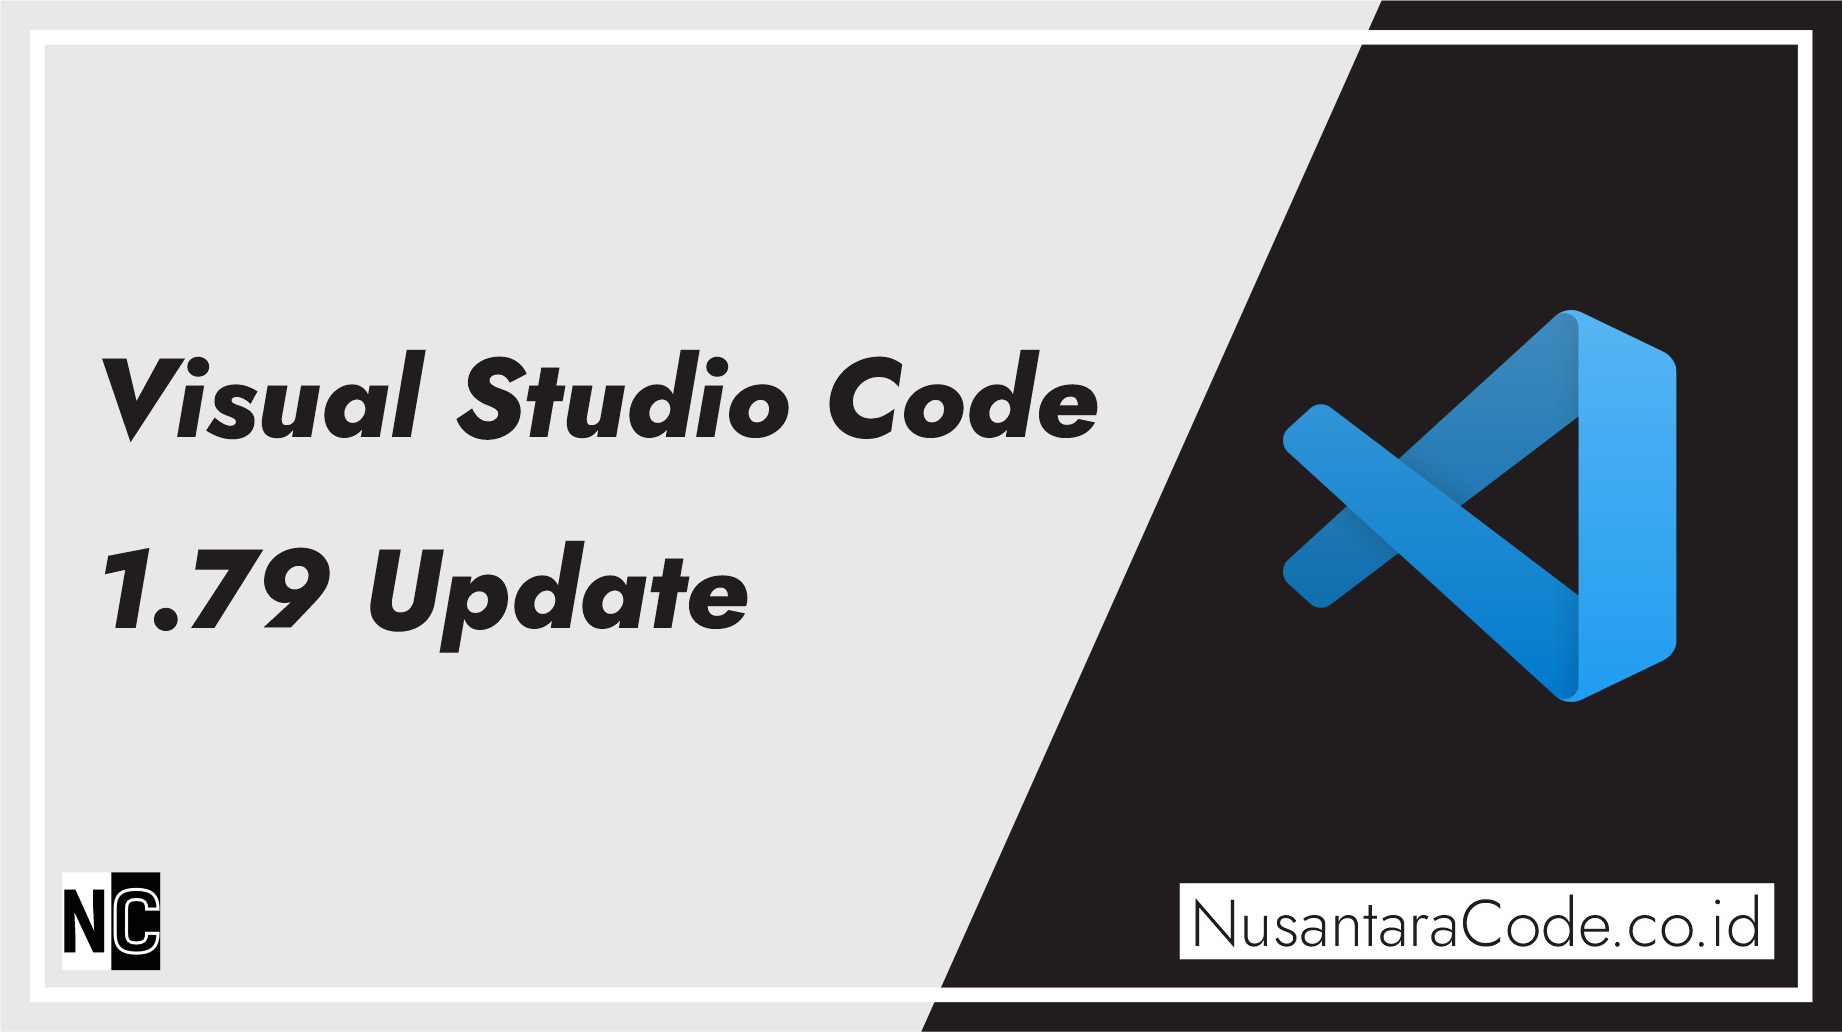 Microsoft Enhances Developer Productivity with Visual Studio Code 1.79 Update